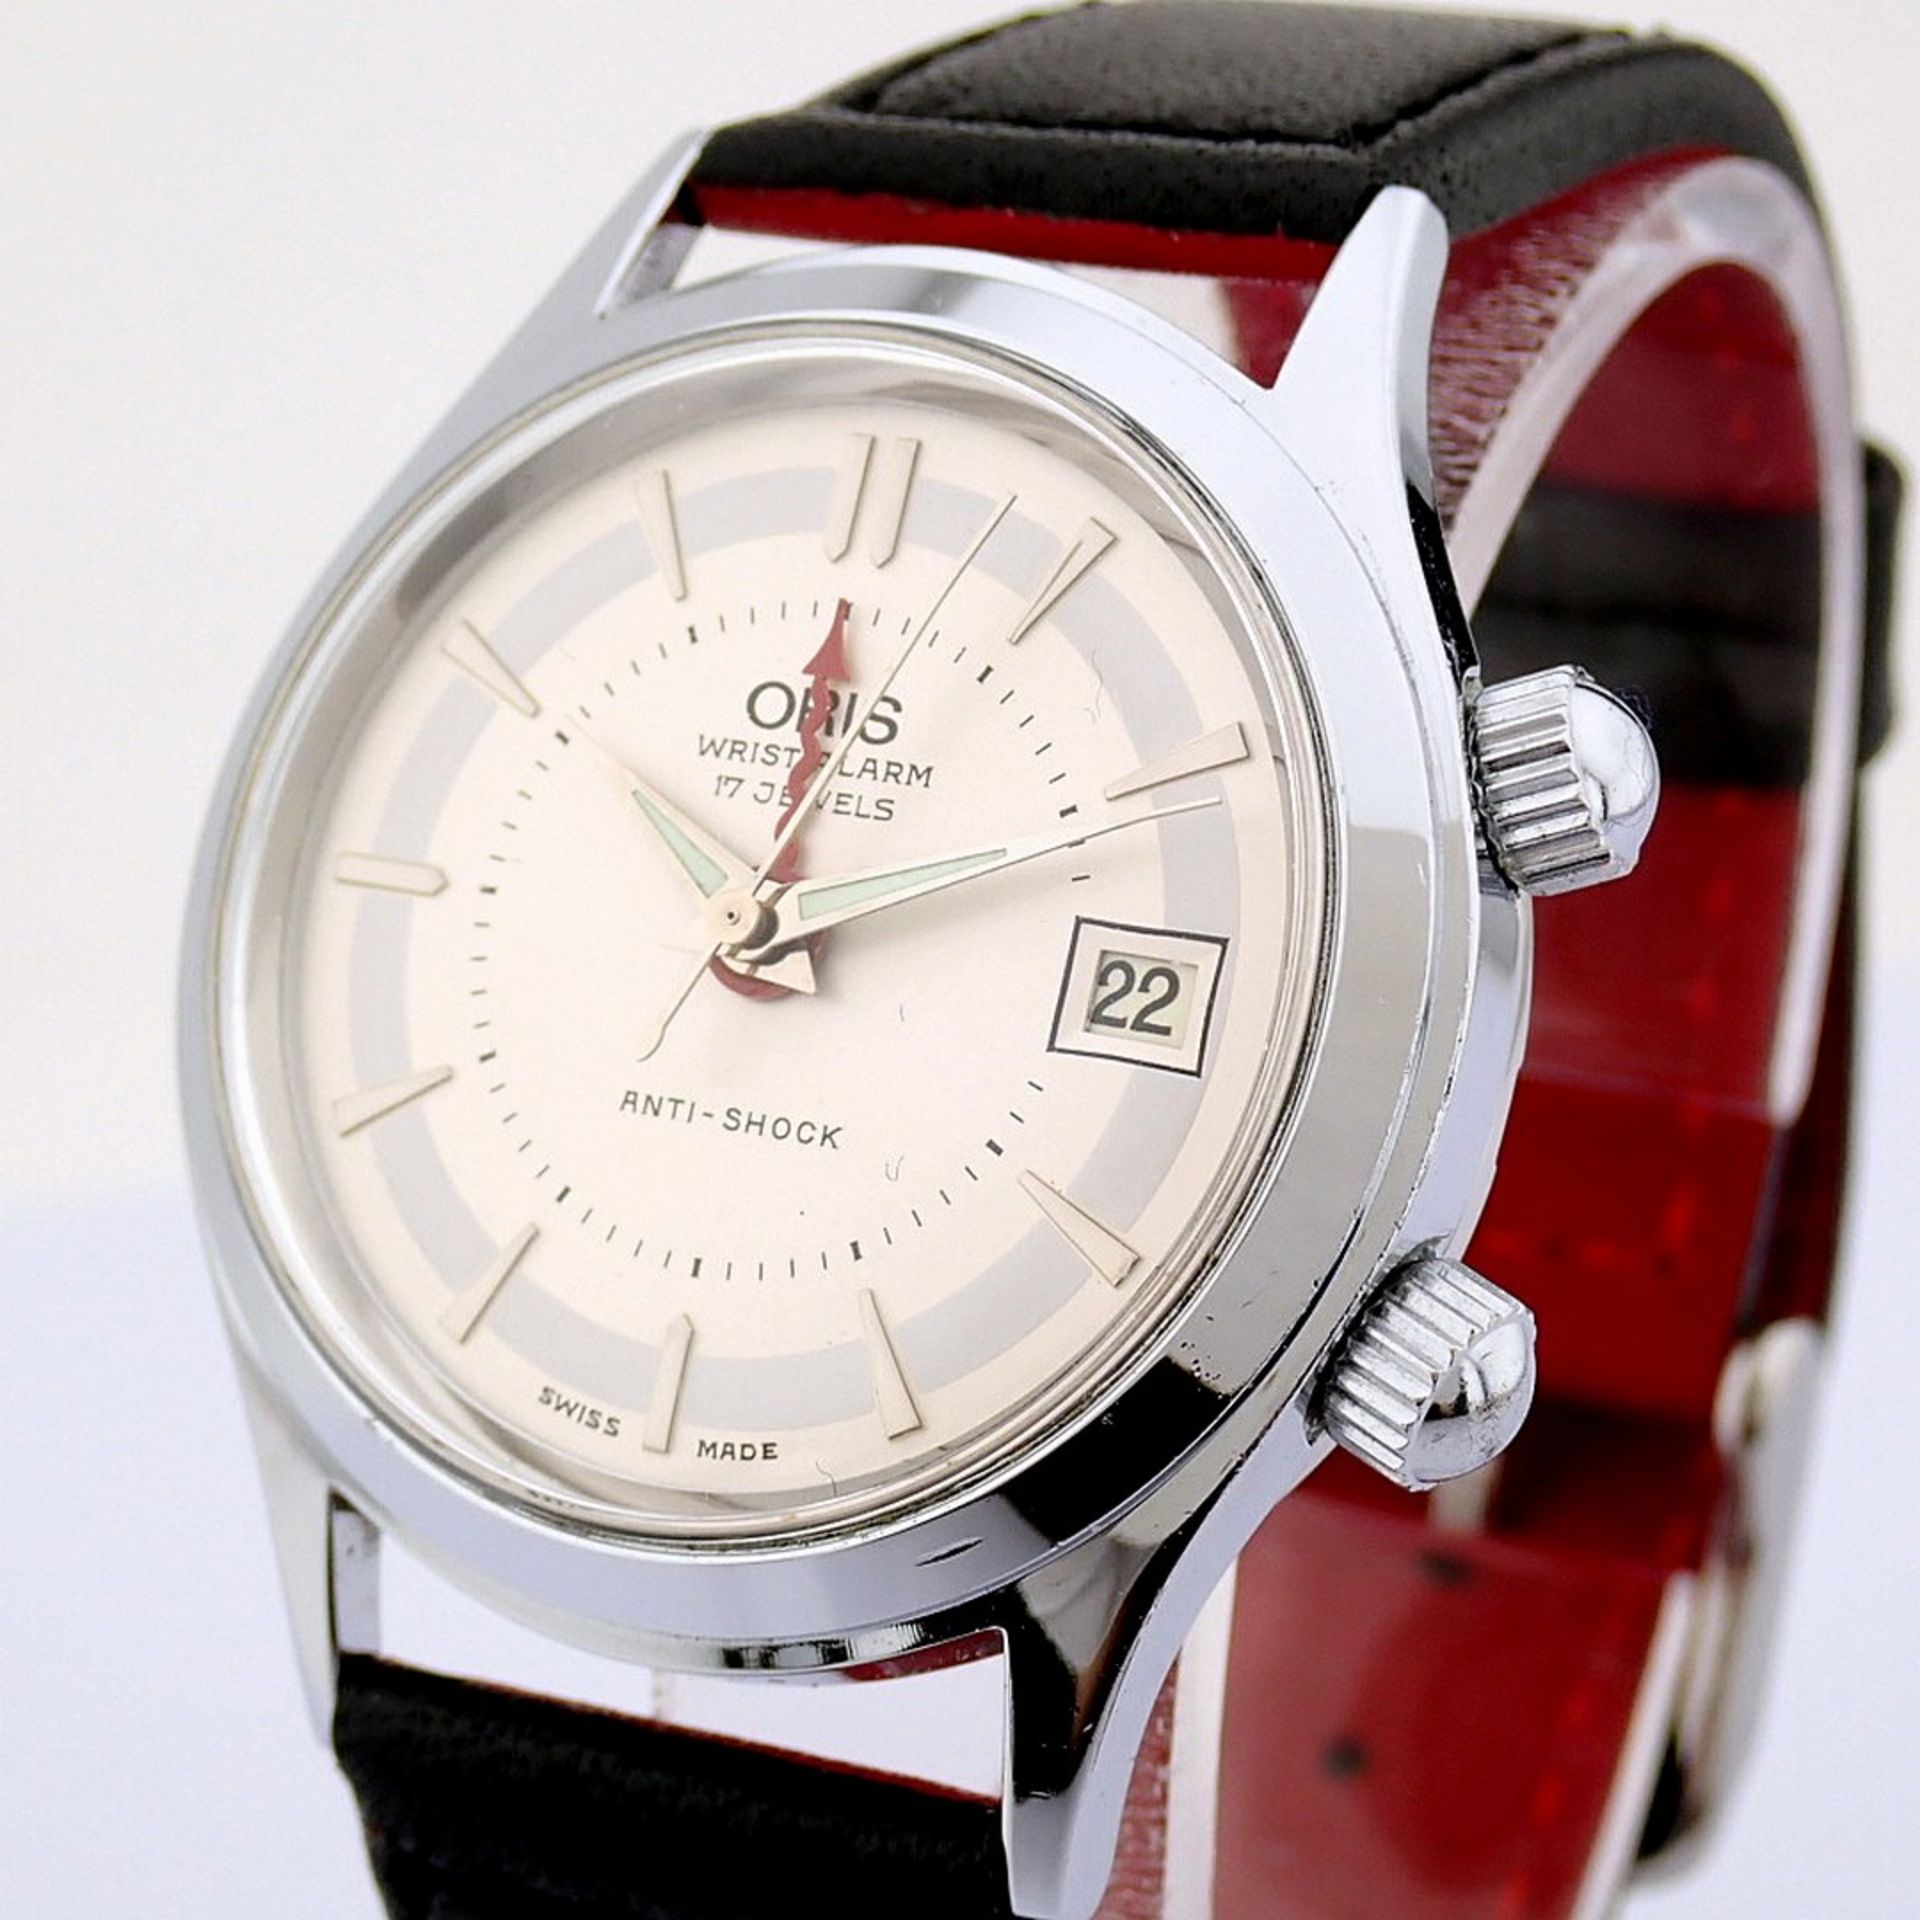 Oris / Wirstalarm 17 Jewels Anti-Shock - Gentlemen's Steel Wristwatch - Image 4 of 10